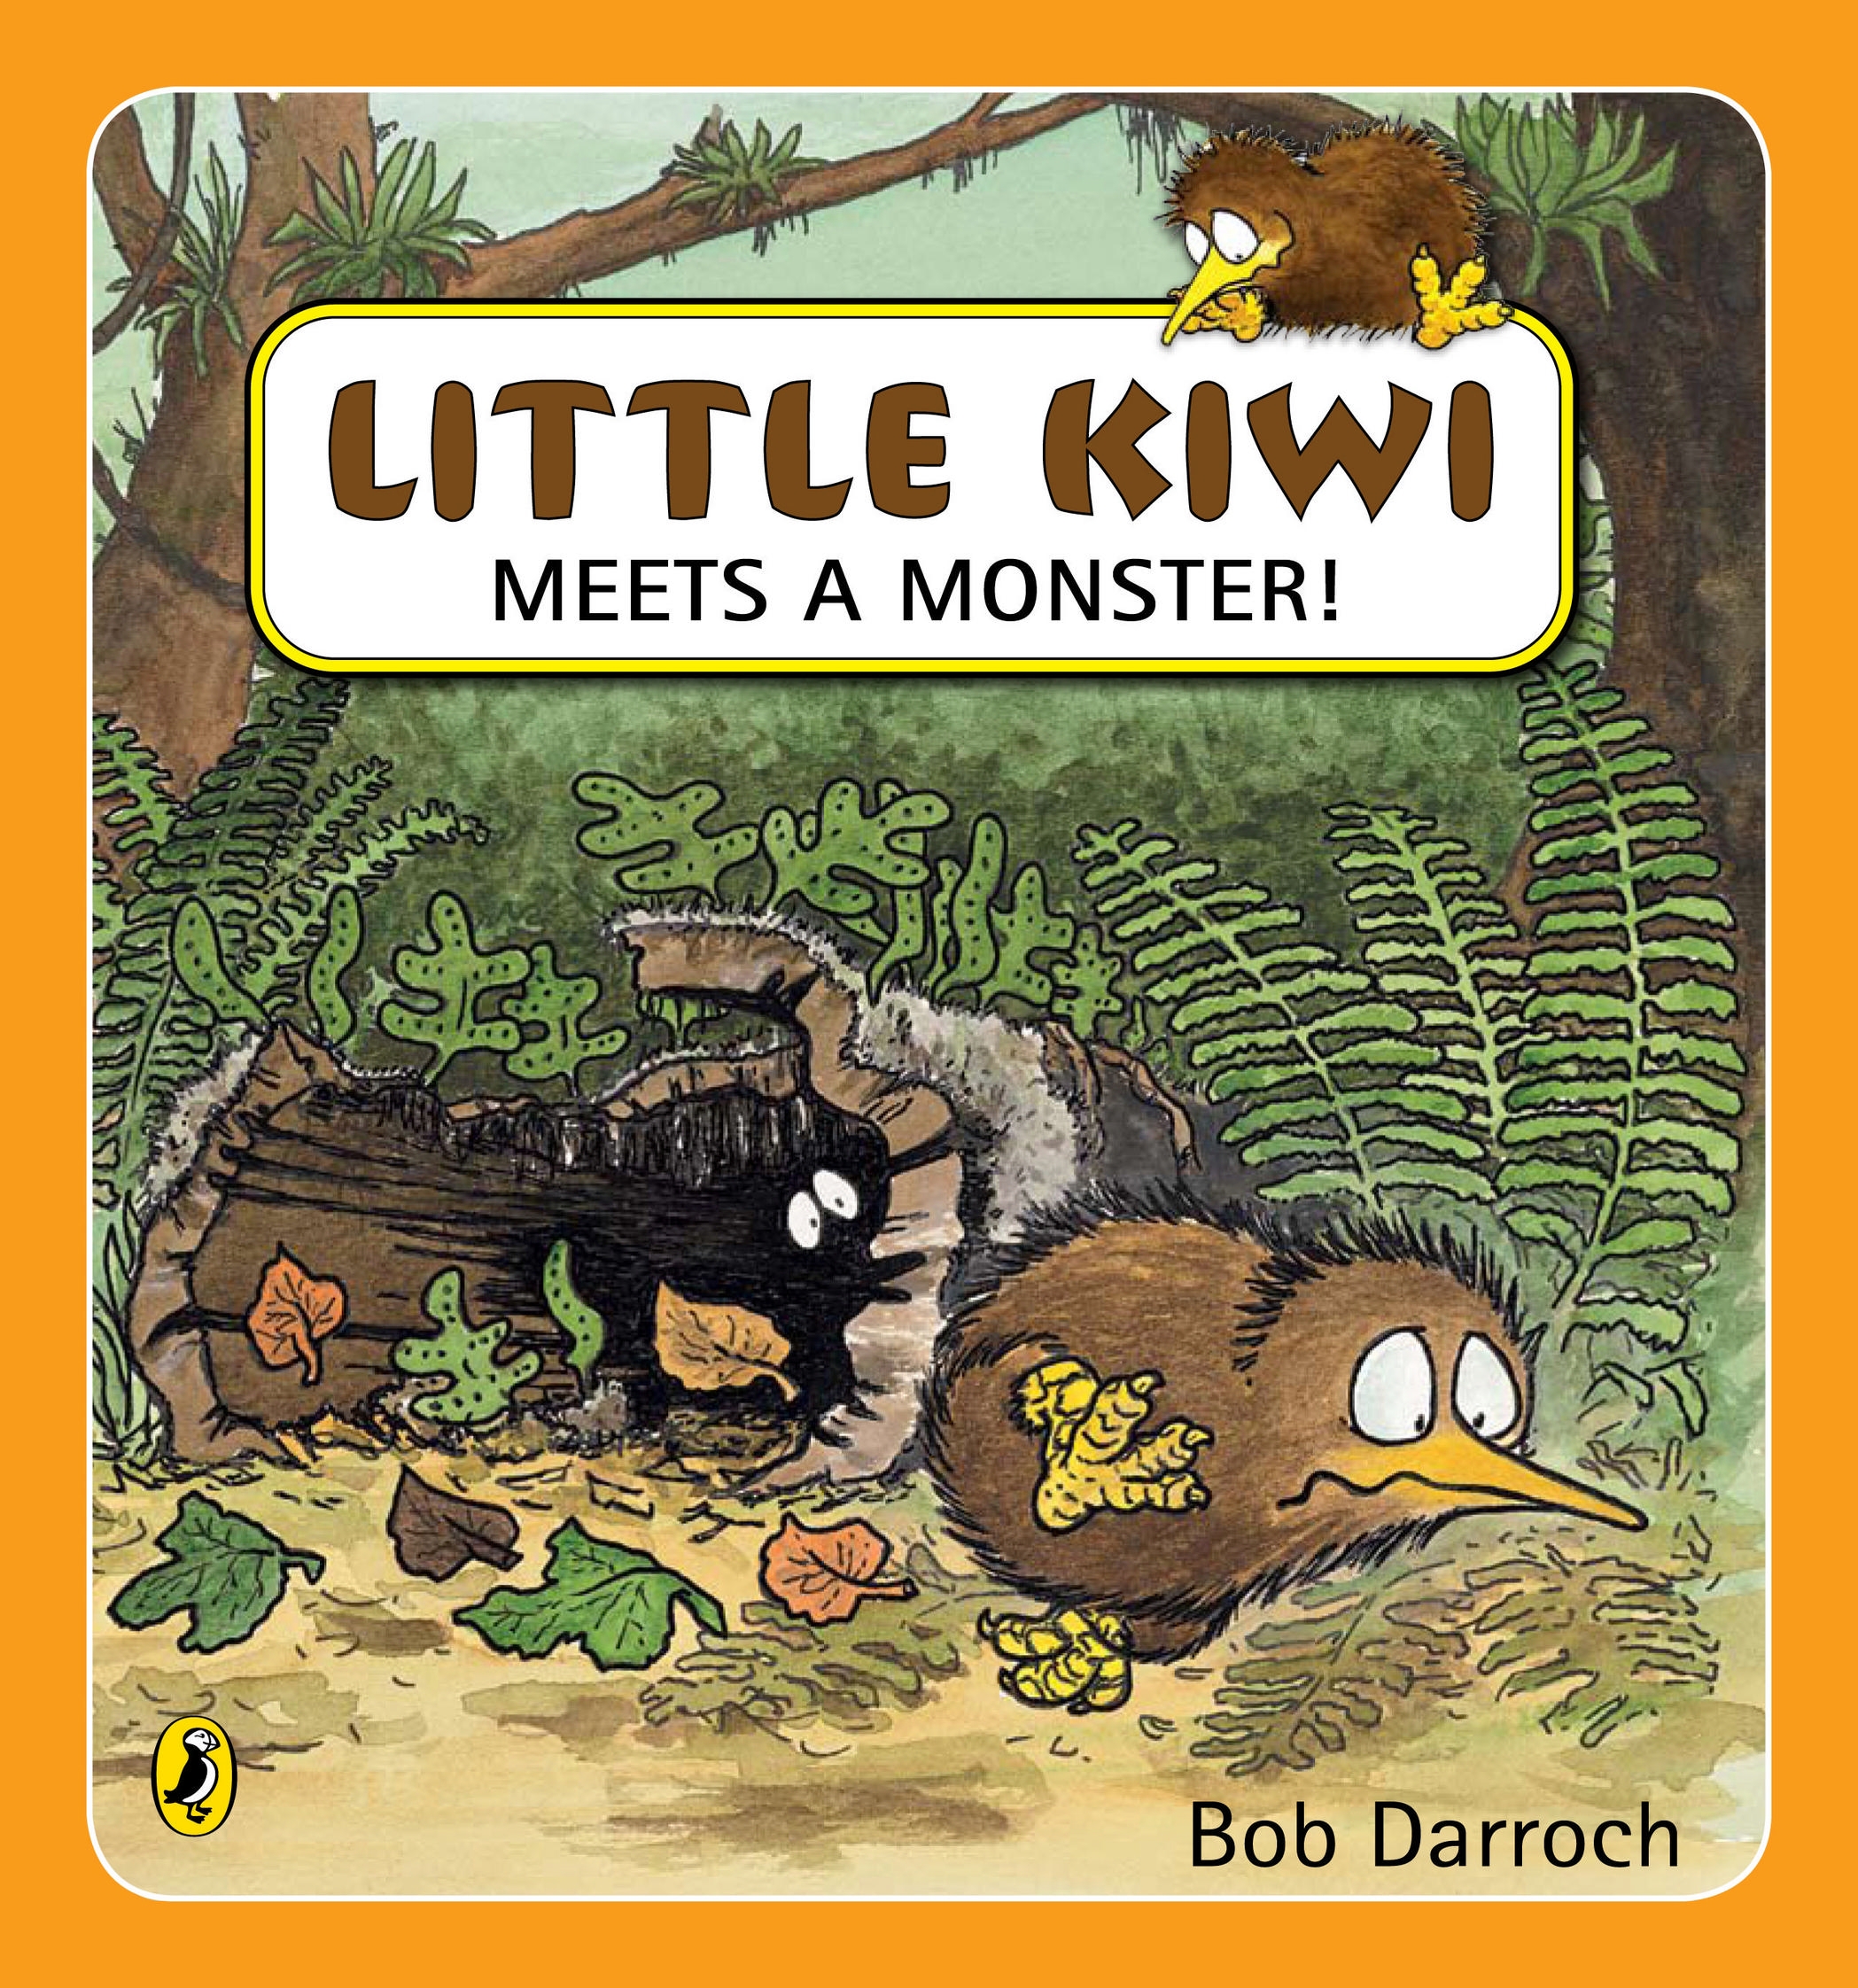 Lil kiwi monster